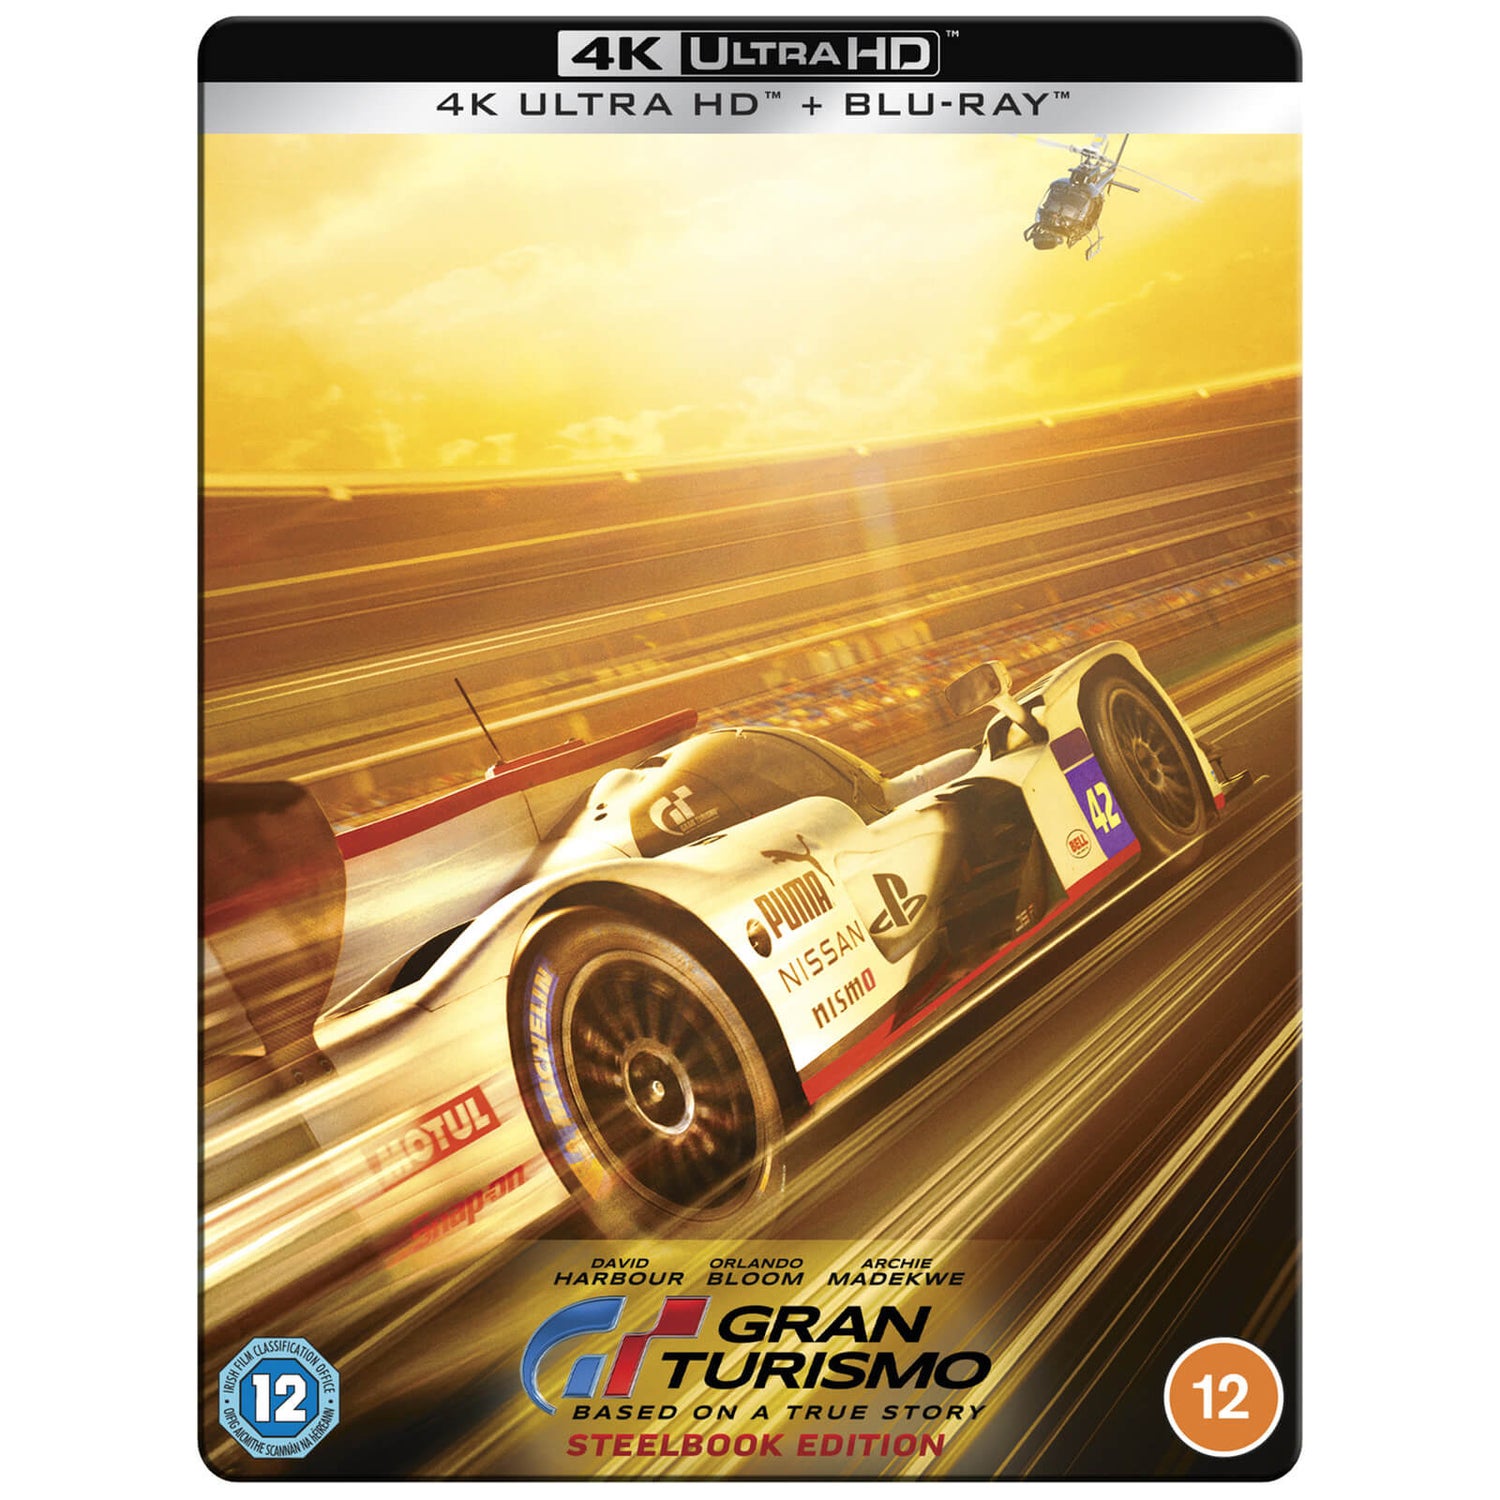 Gran Turismo: Based On A True Story 4K Ultra HD SteelBook #2 (Gold/Orange)